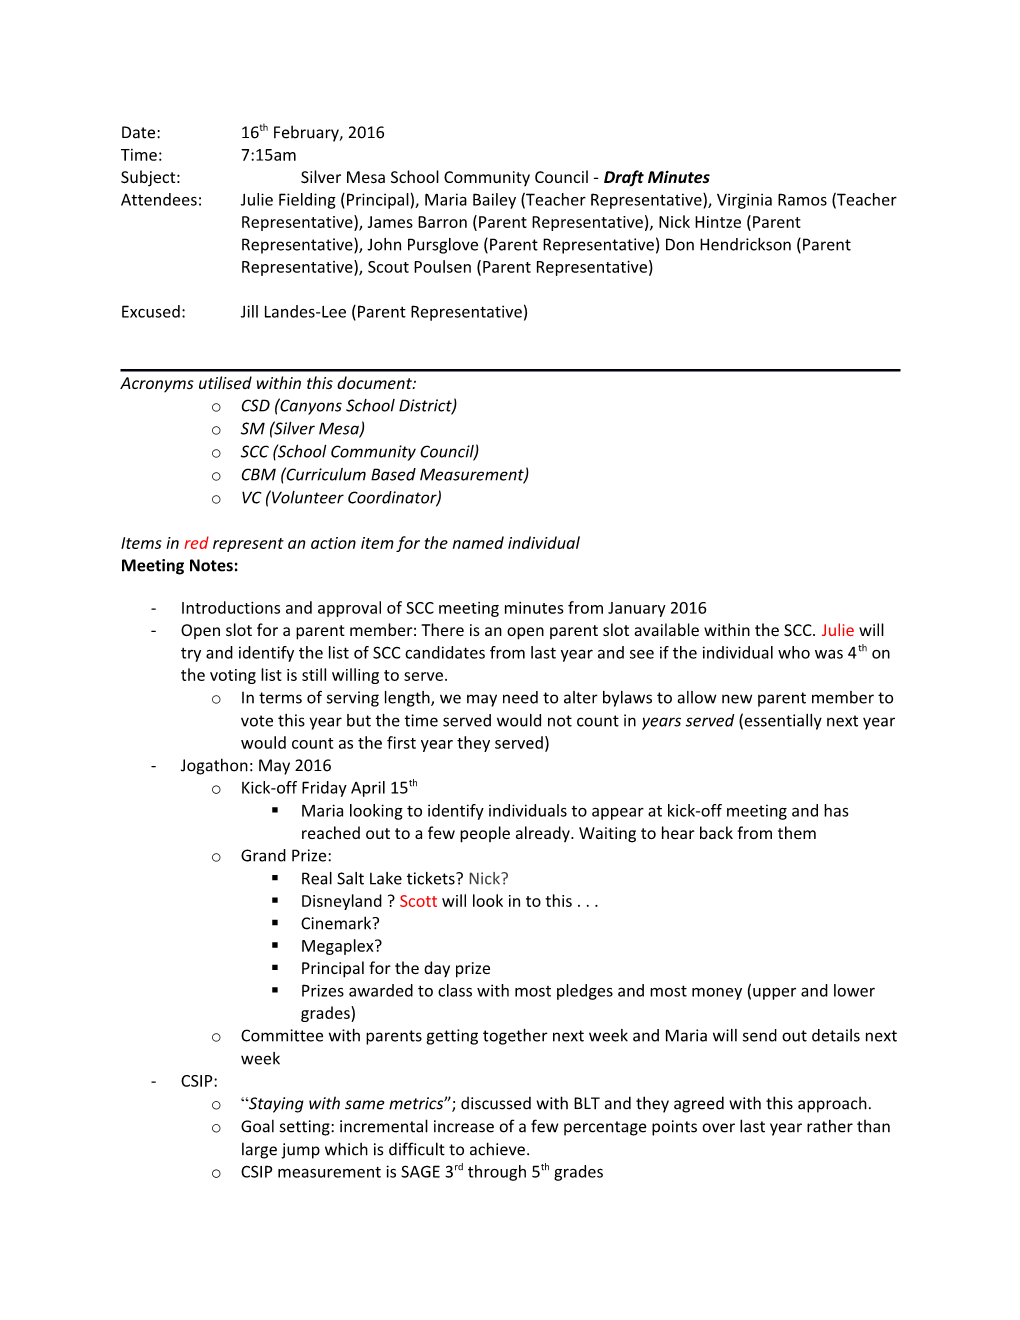 Subject: Silver Mesa School Community Council - Draft Minutes